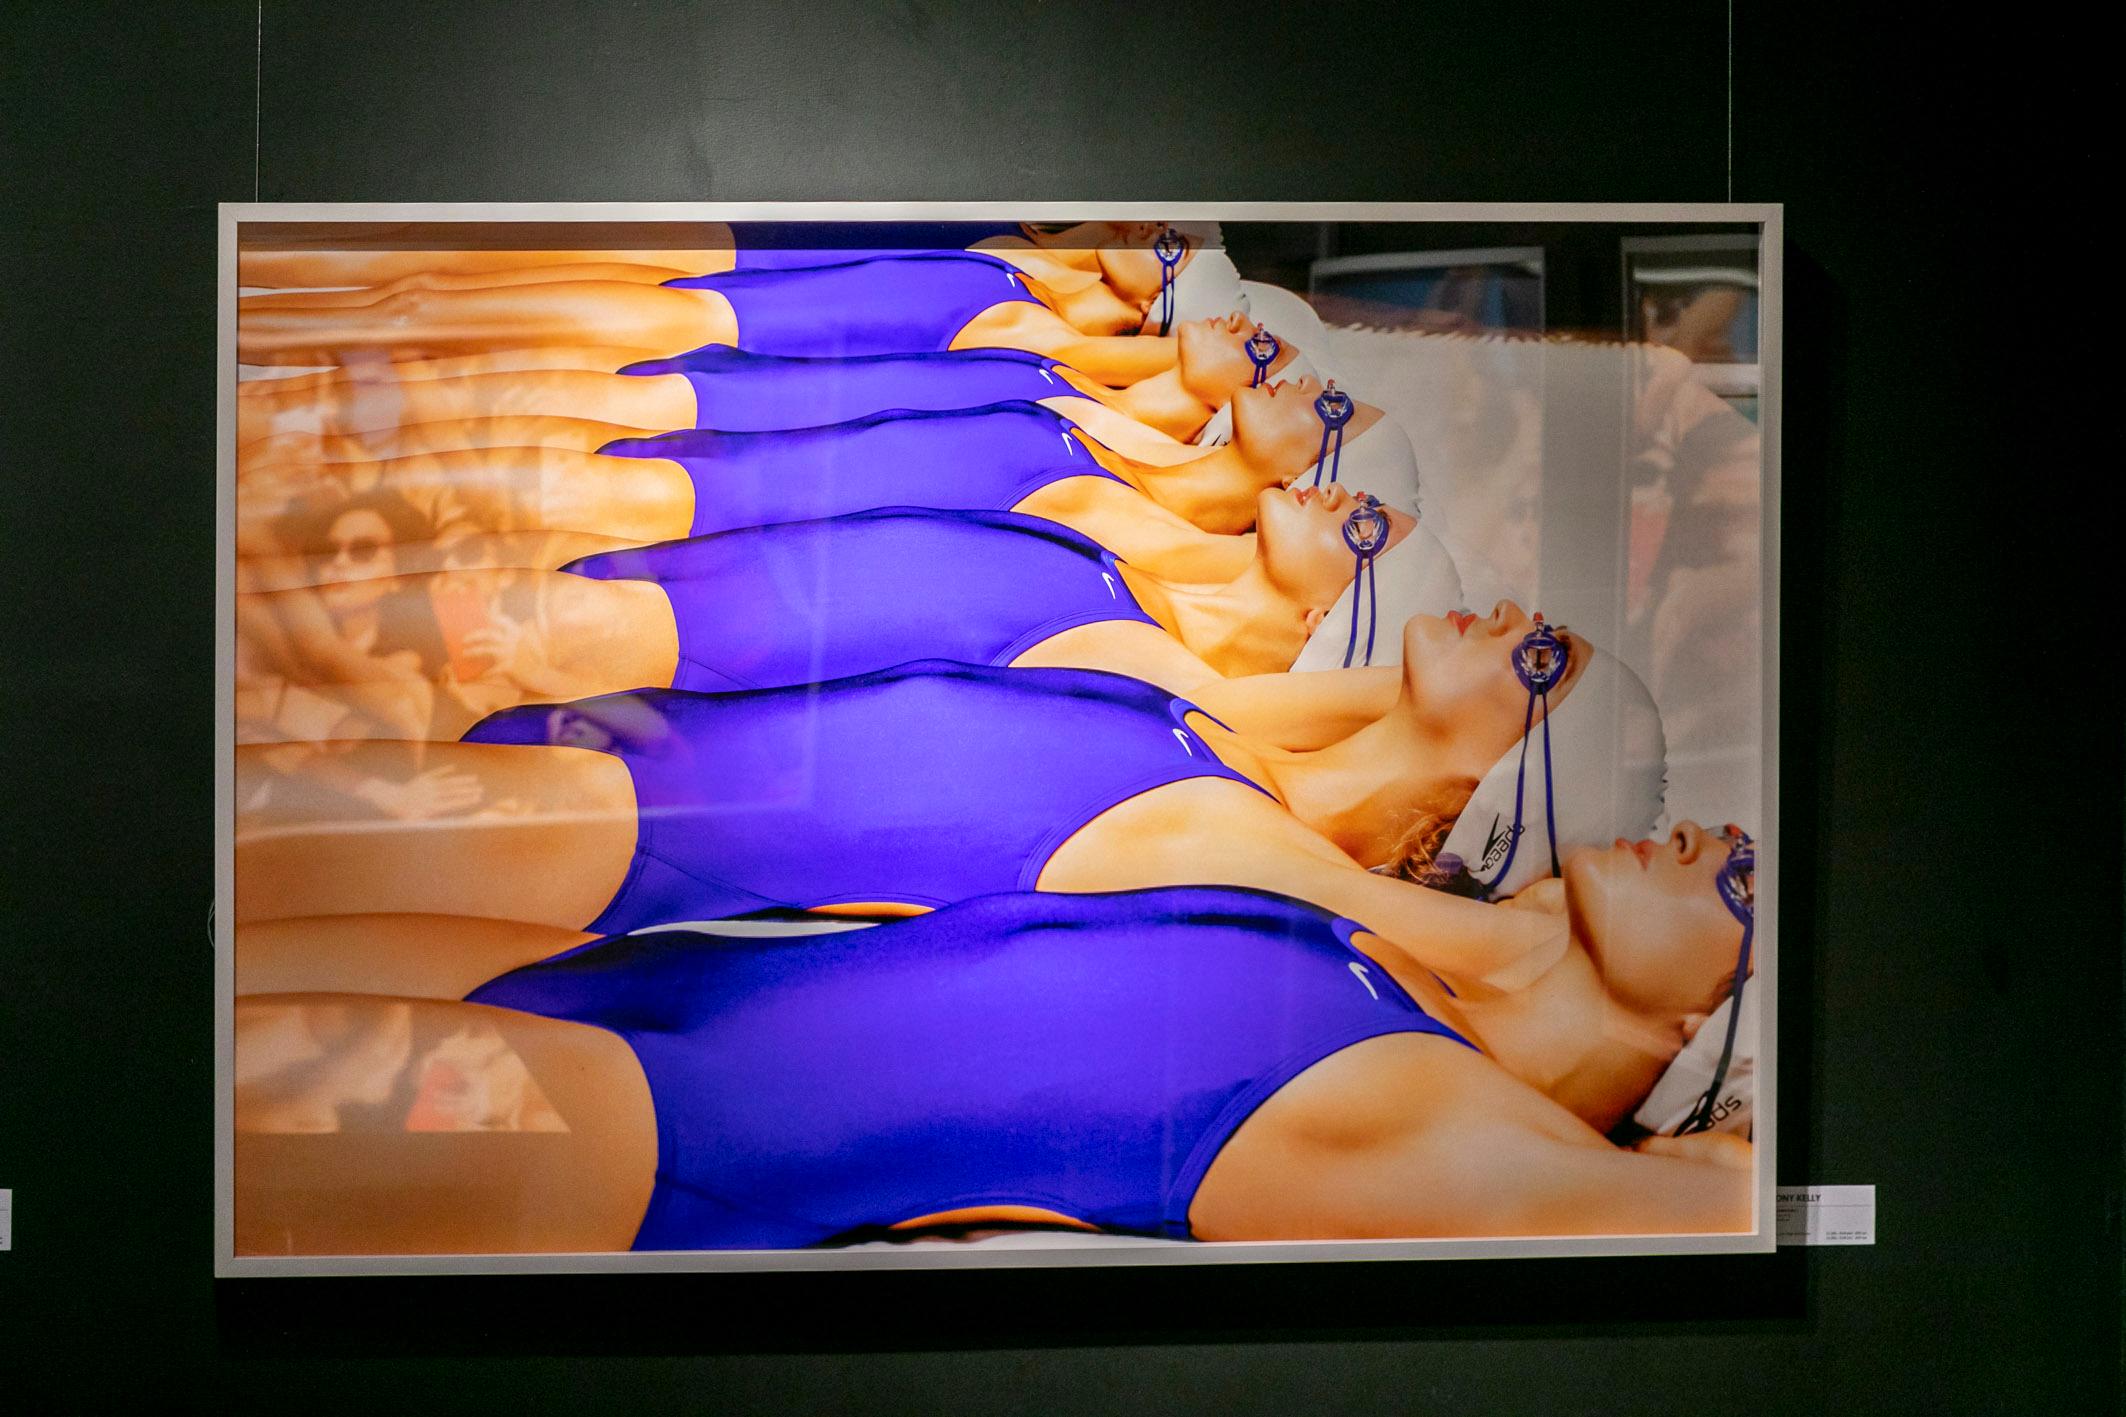 TK Swimteam - colourful portrait of women sunbathing in blue swimsuits - Photograph by Tony Kelly